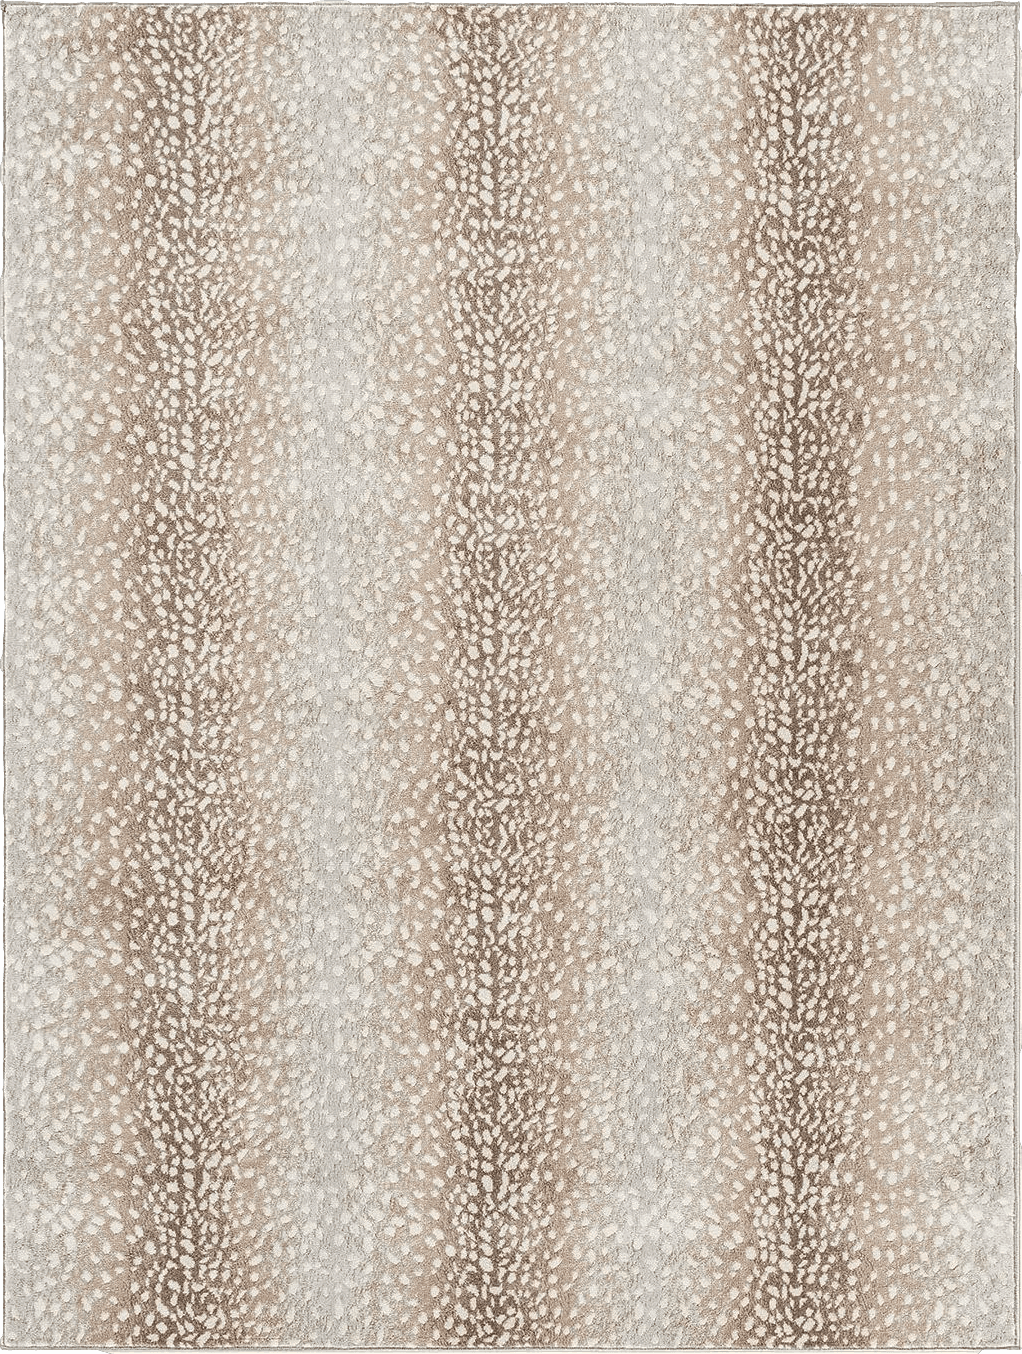 Artistic Weavers Pablo Antelope Print Area Rug,7'10" x 10',Camel/Light Gray